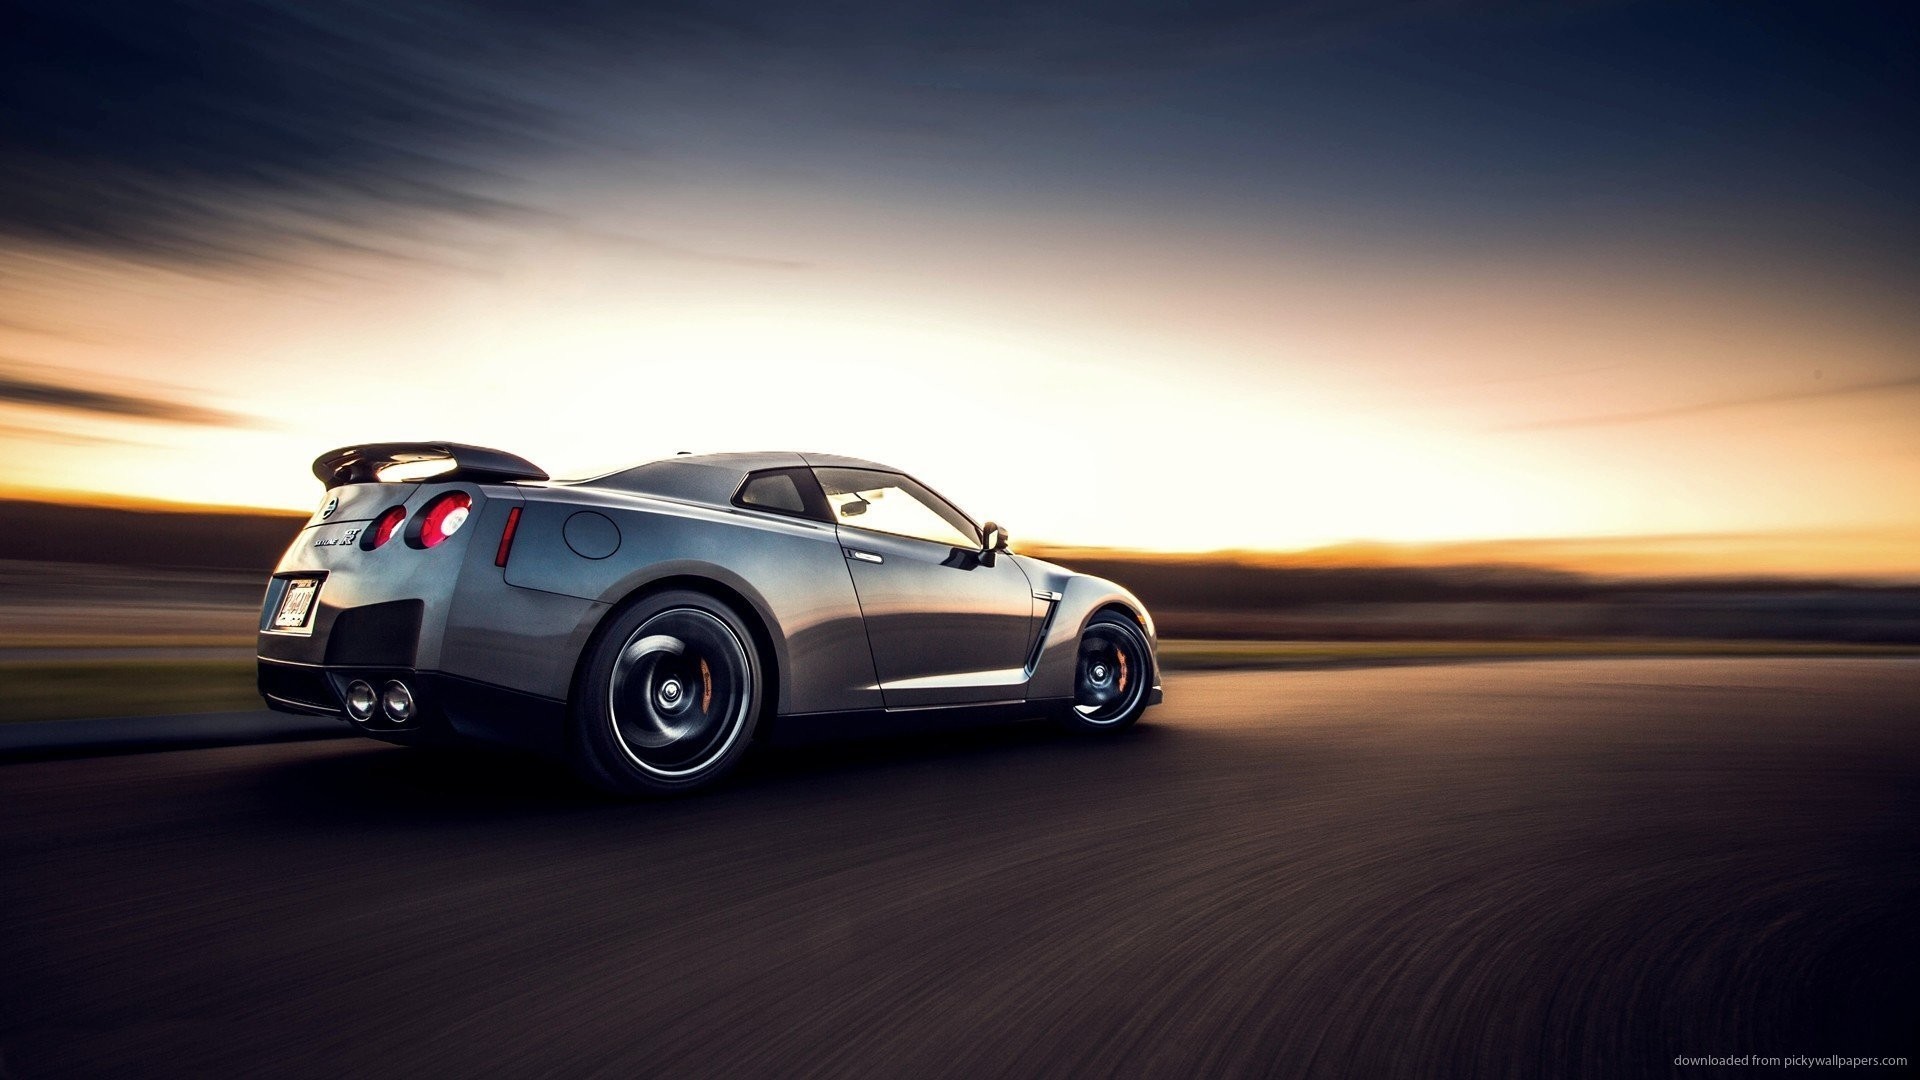 Nissan GTR Motion Blur Desktop Wallpaper picture